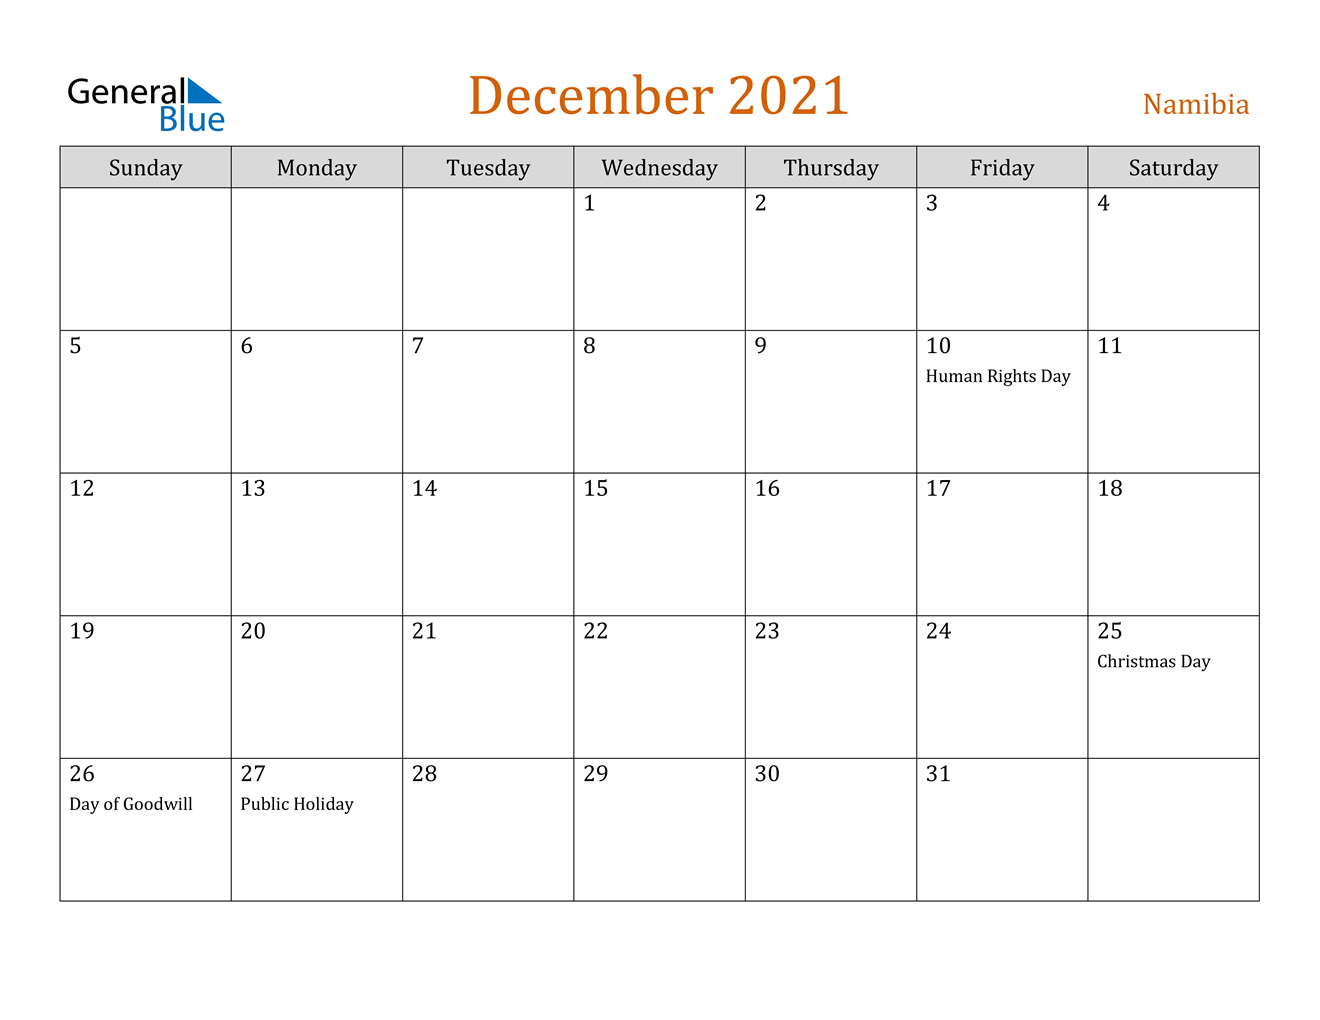 December 2021 Calendar - Namibia